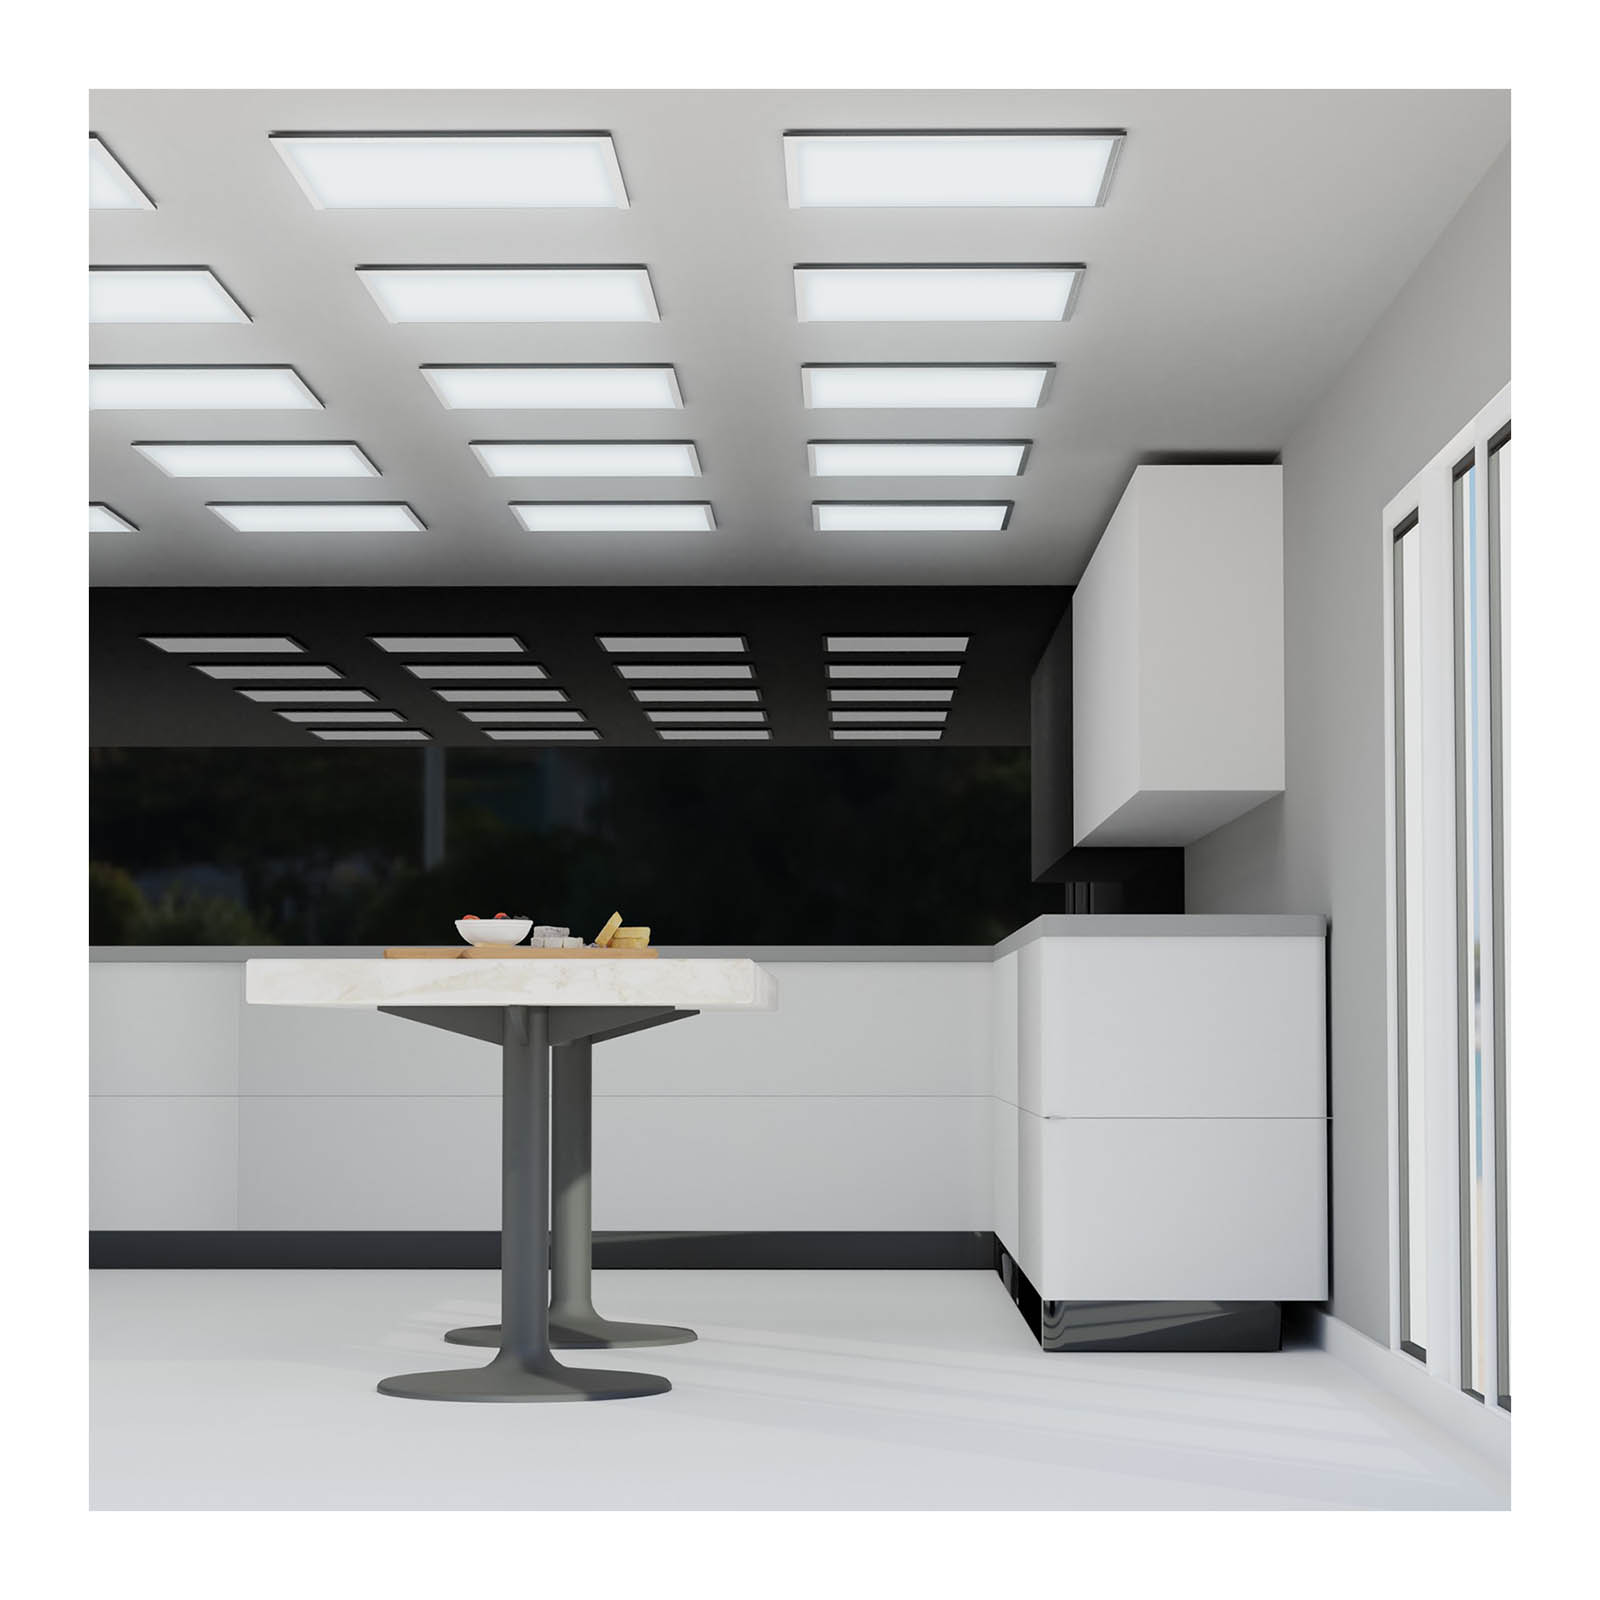 LED Ceiling Panel - 62 x 62 cm - 48 W - 4,560 lm - 5,700 K